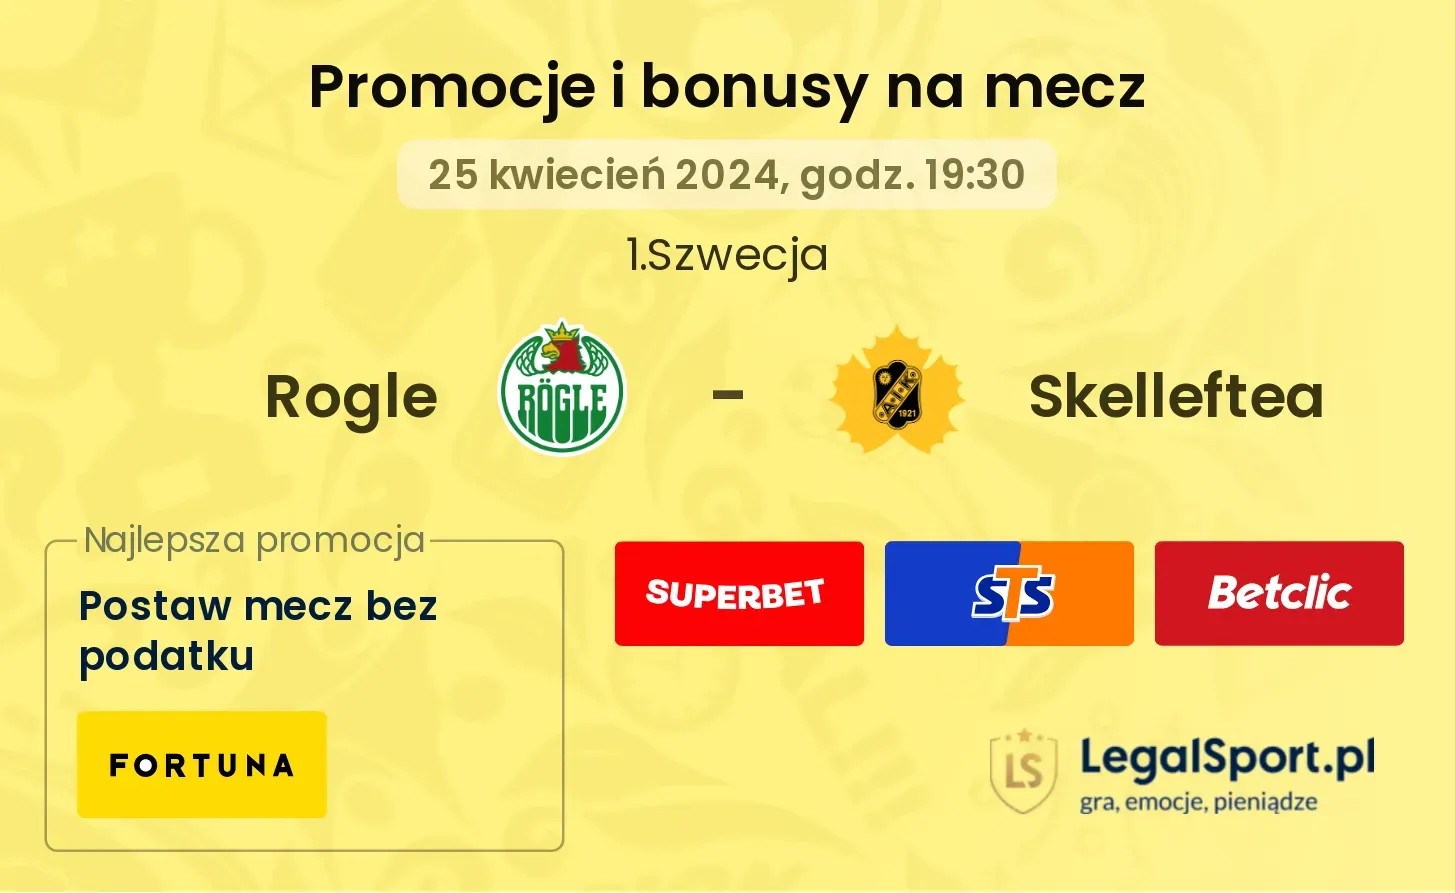 Rogle - Skelleftea promocje bonusy na mecz